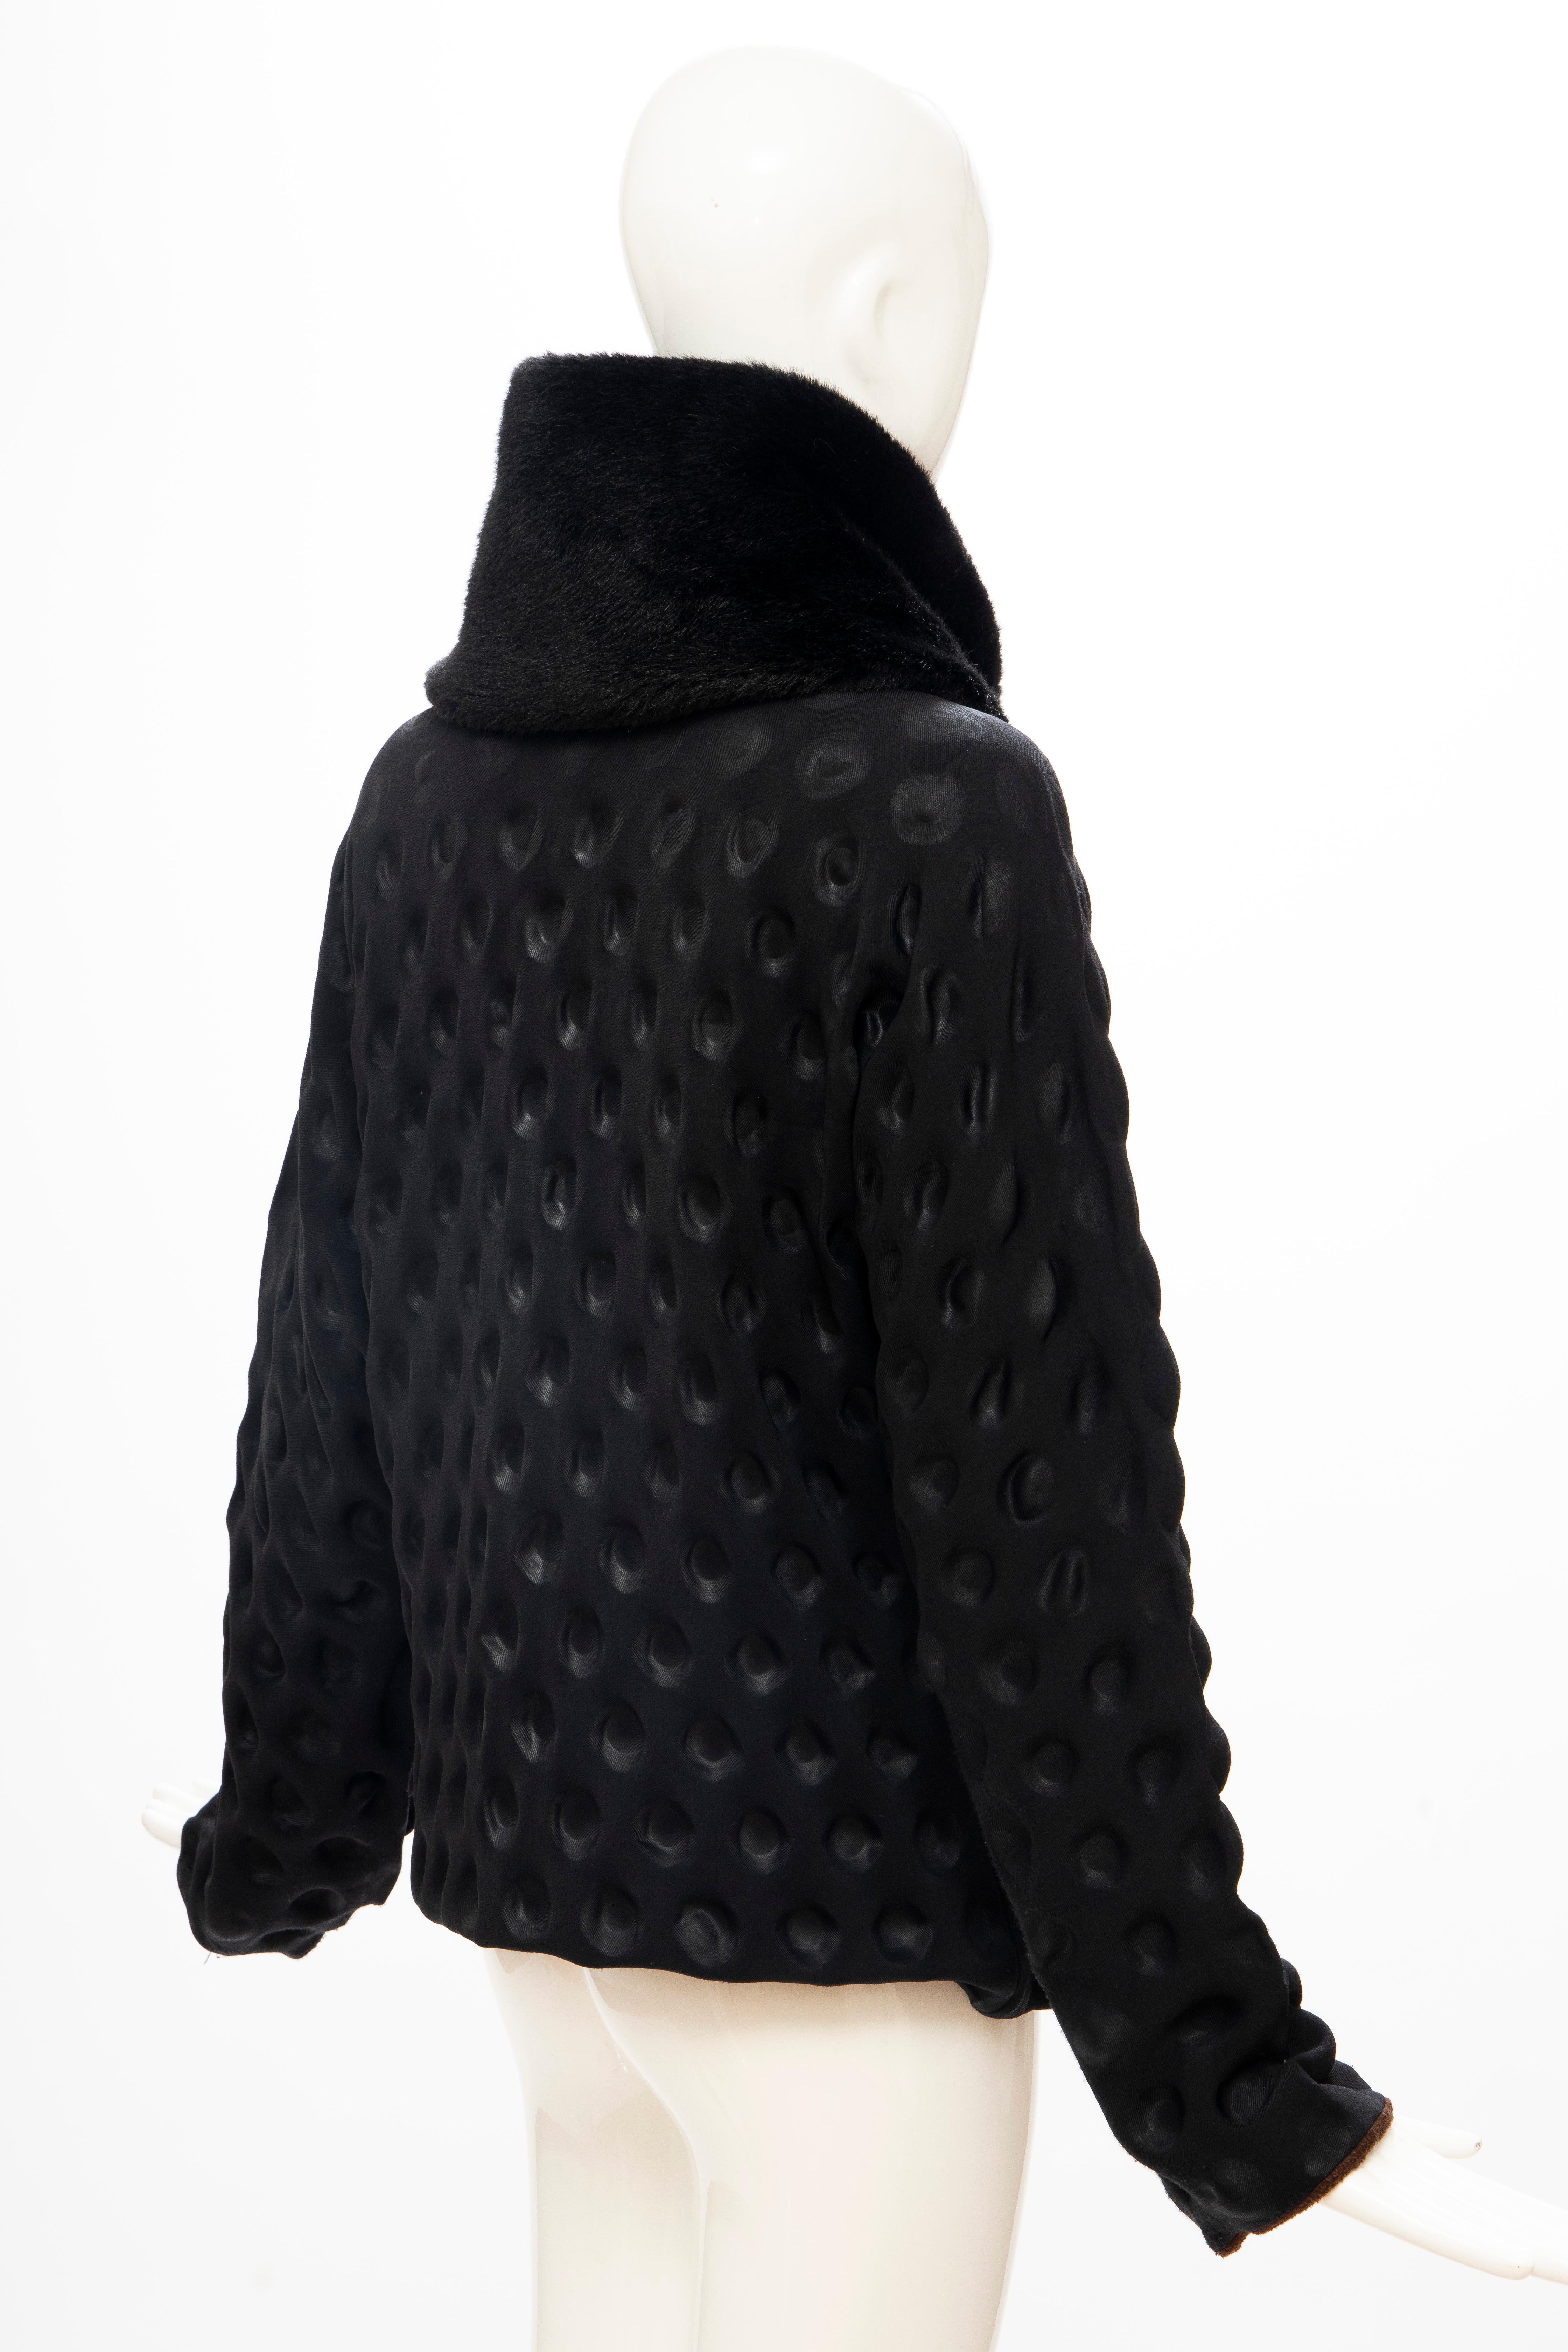 Issey Miyake Runway Black Egg Carton Jacket Detachable Faux Fur Collar, Fall 2000 For Sale 2